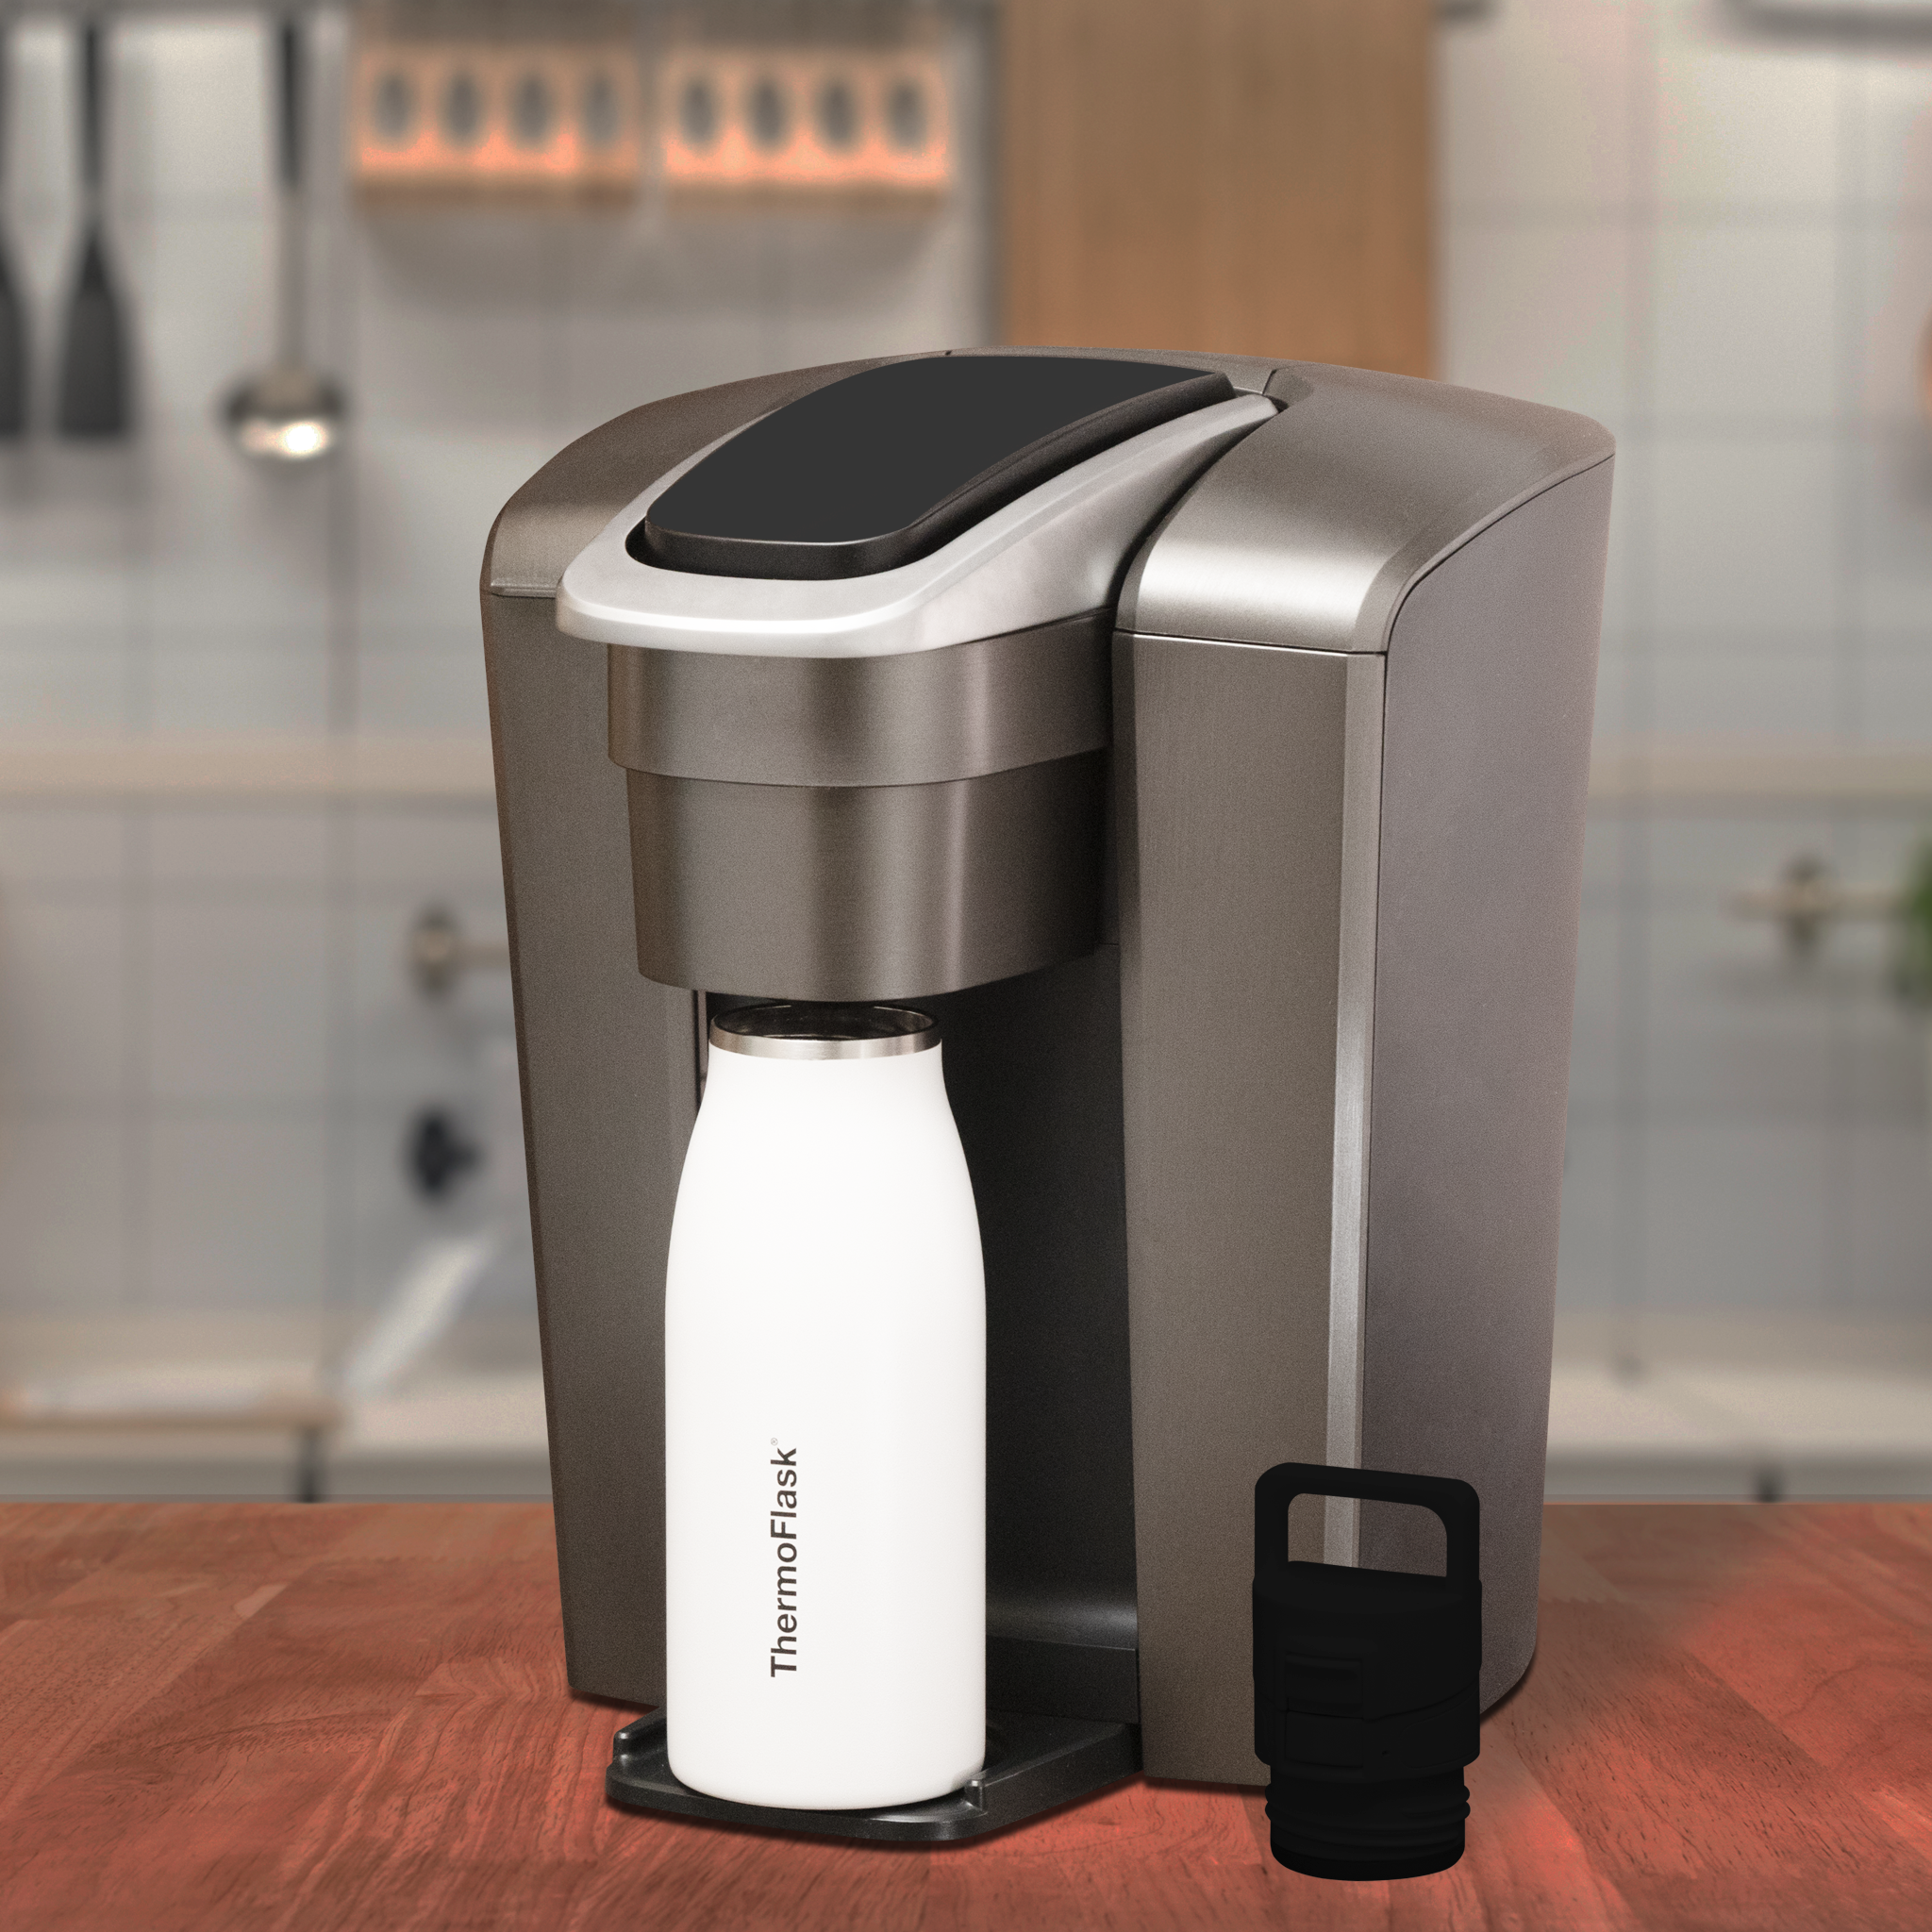  Takeya Traveler Insulated Coffee Mug with Leak Proof Lid, BPA  Free, 17 Ounce, Aqua : Home & Kitchen